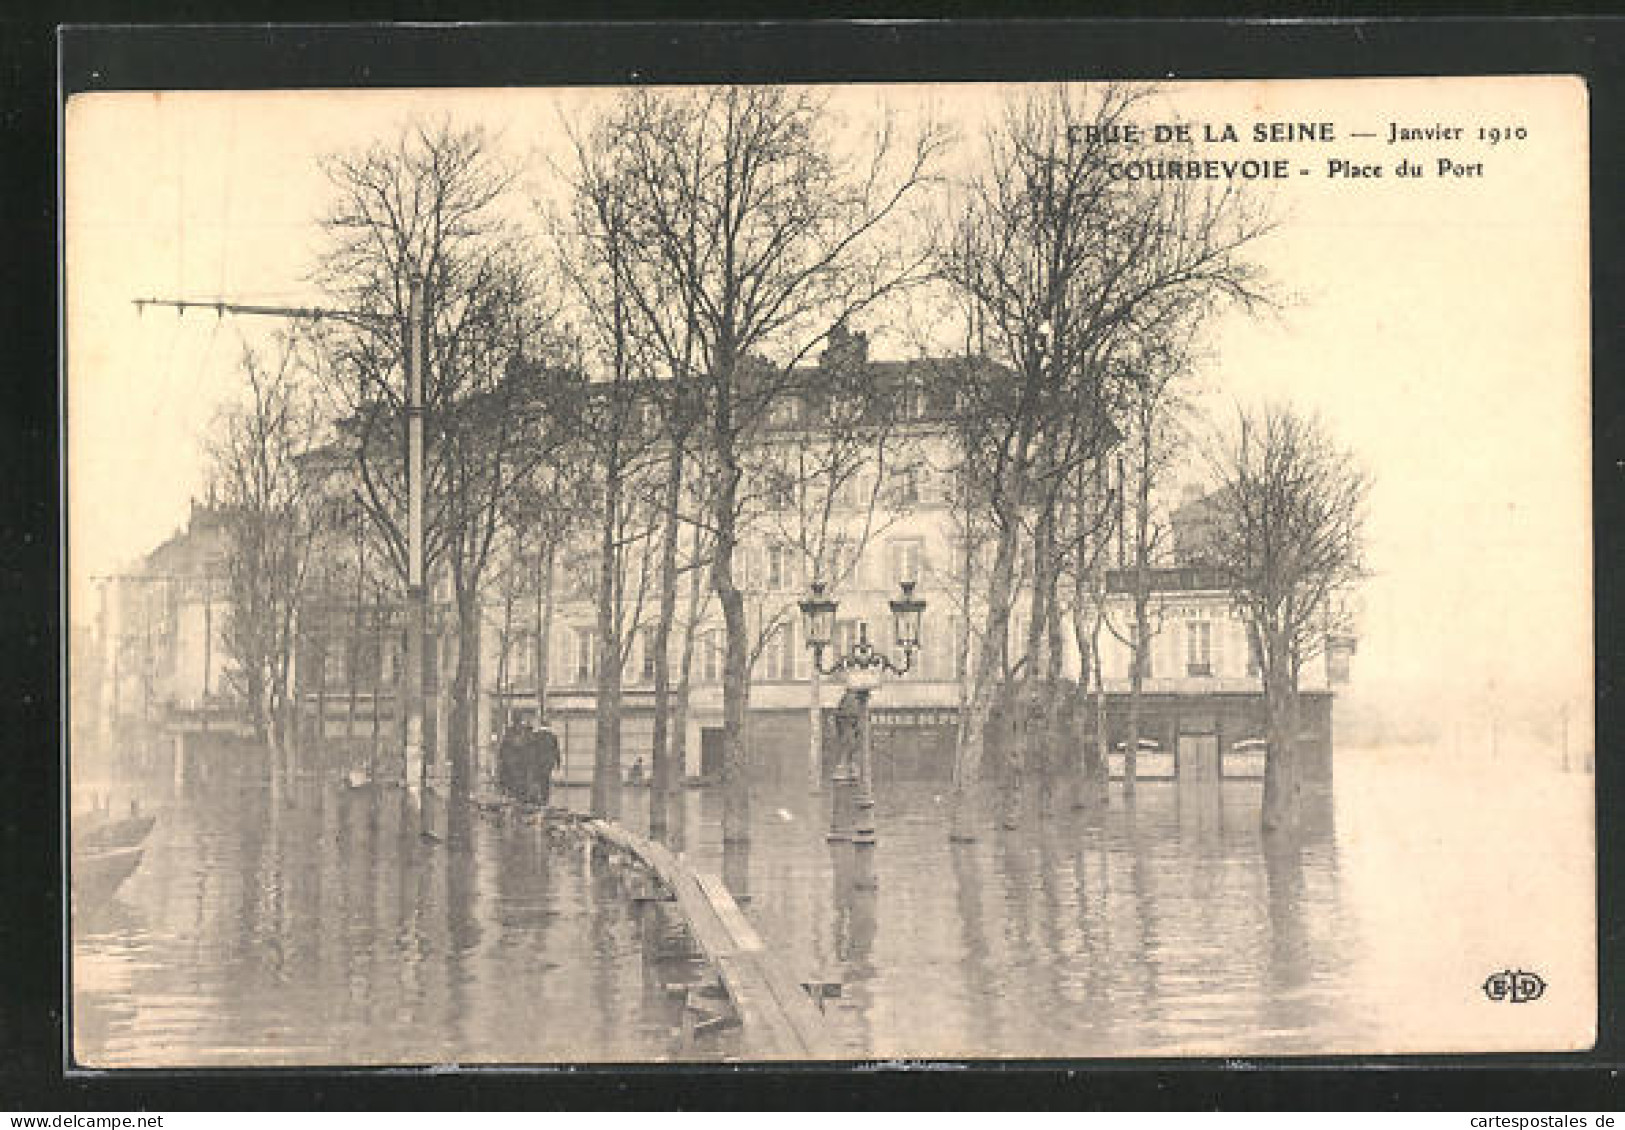 AK Crue De La Seine Janvier 1910, Courbevoie - Place Du Port, Hochwasser  - Floods